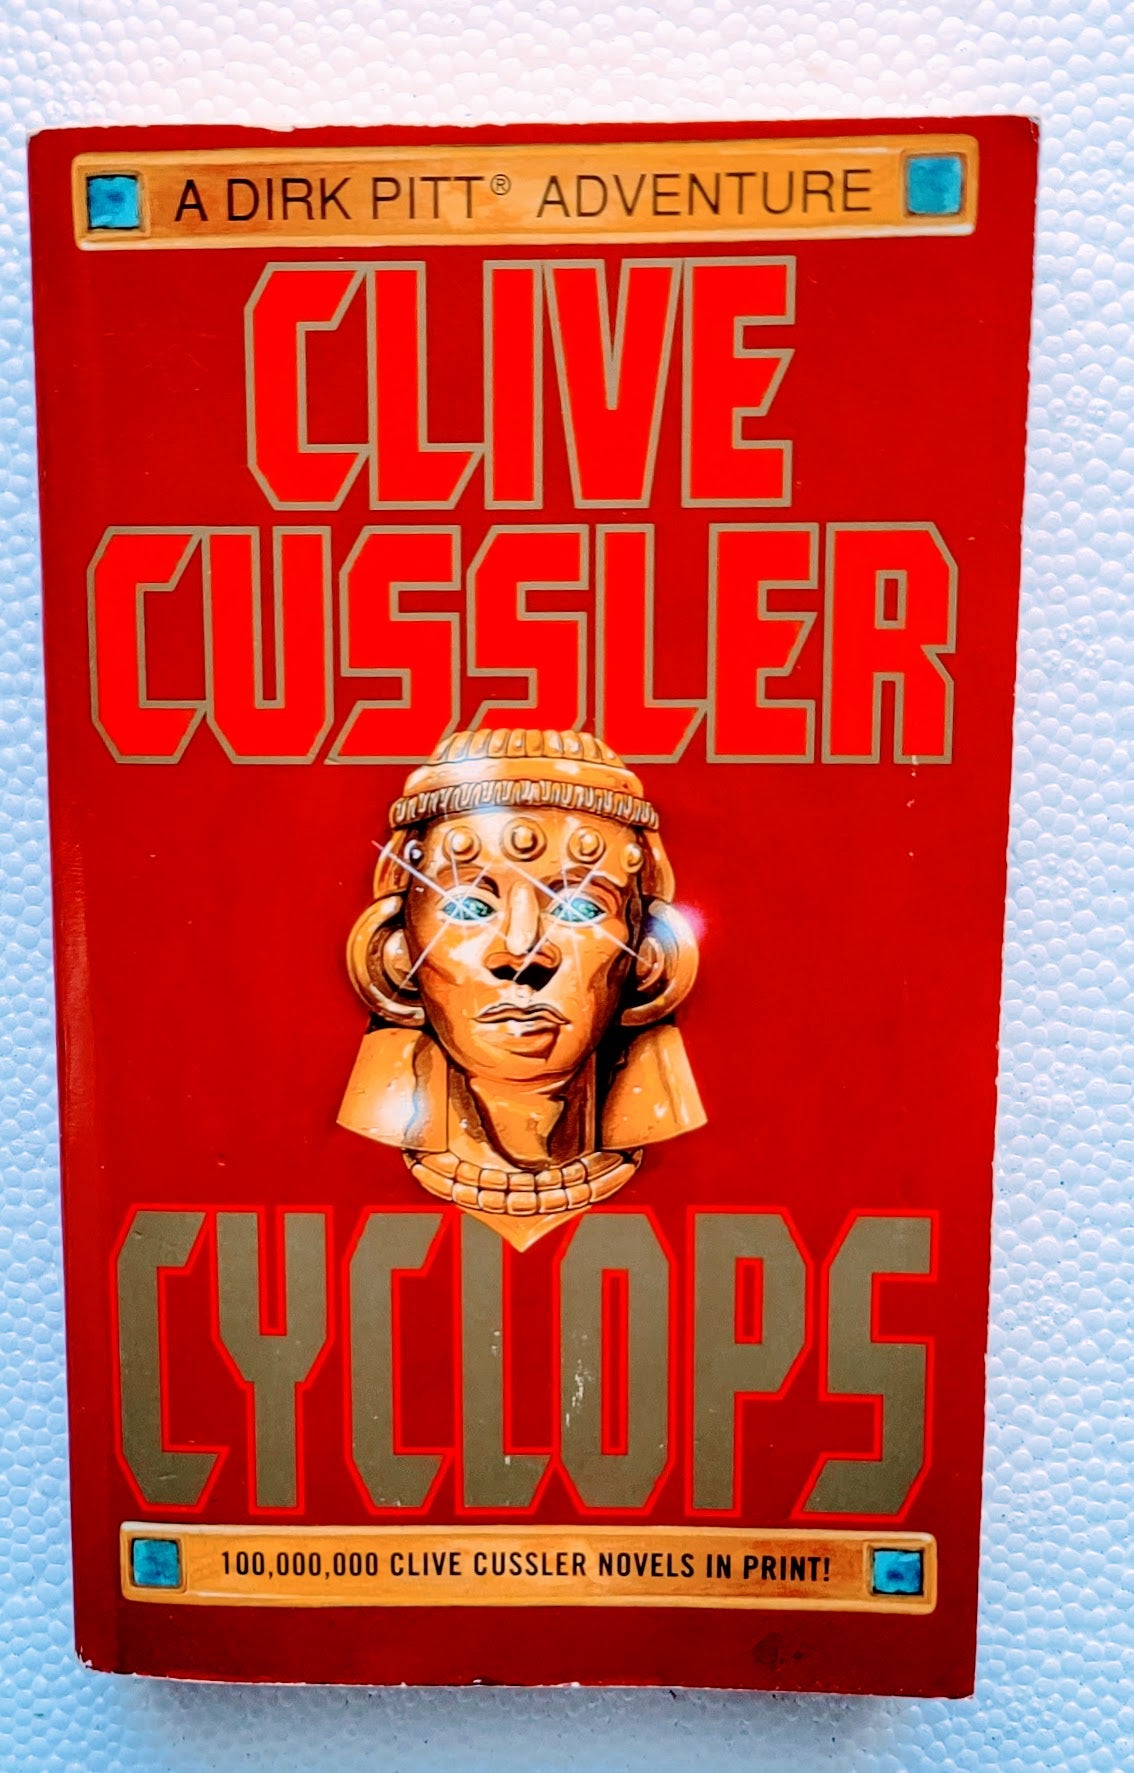 Cyclops: A Dirk Pitt Adventure Novel Series Book by Clive Cussler  Xclusive Collectibles   